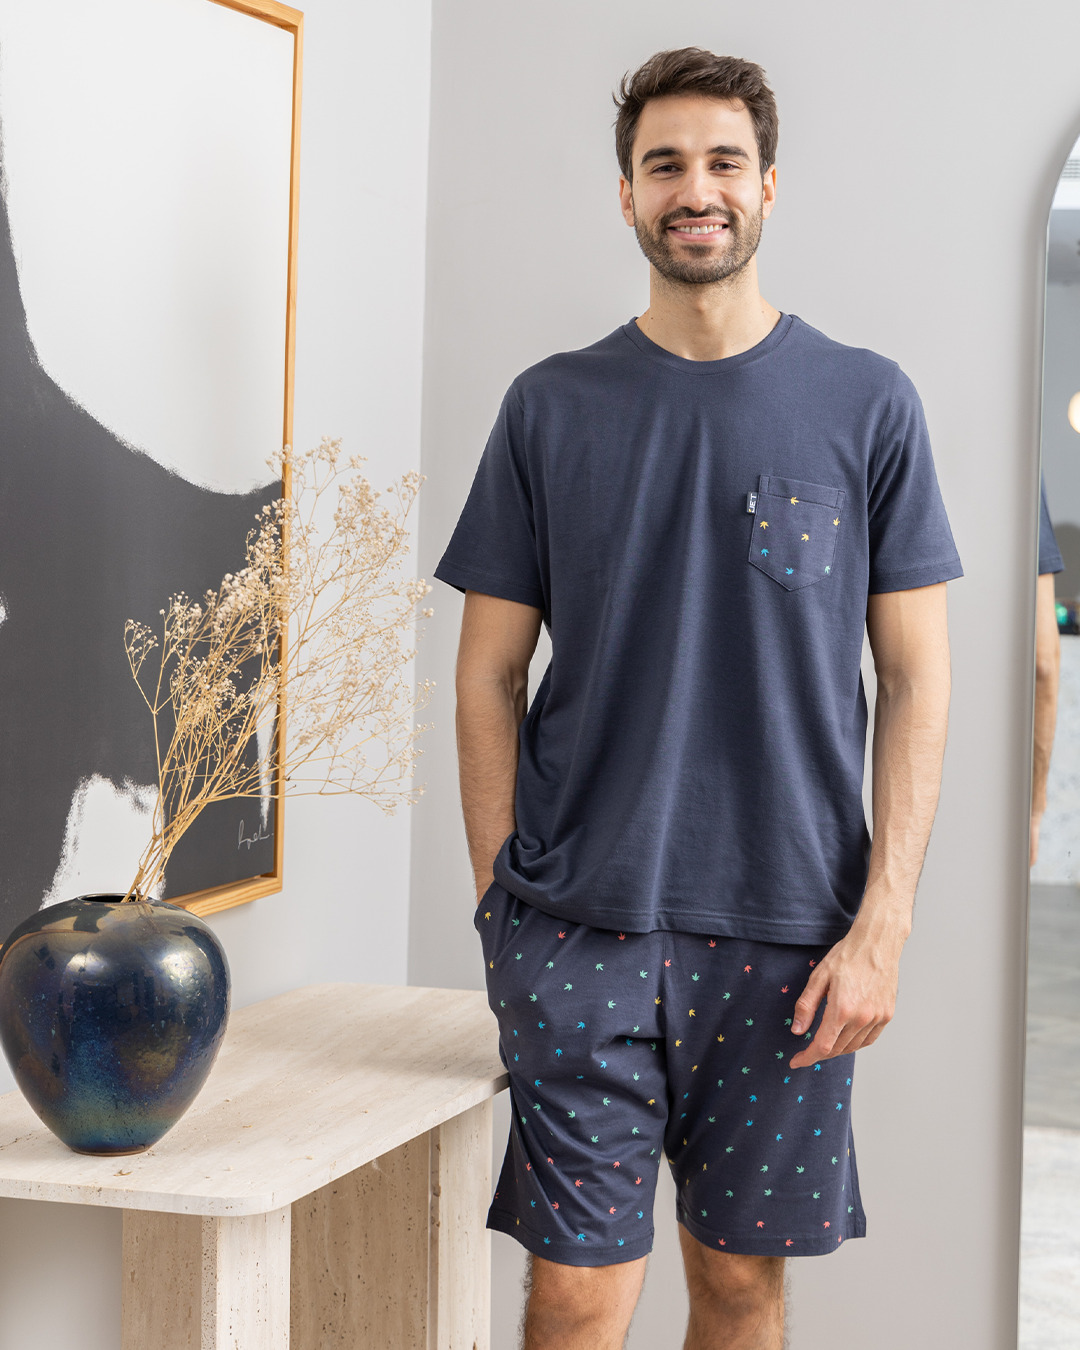 Men's pajamas, round shorts, printed bodice pocket